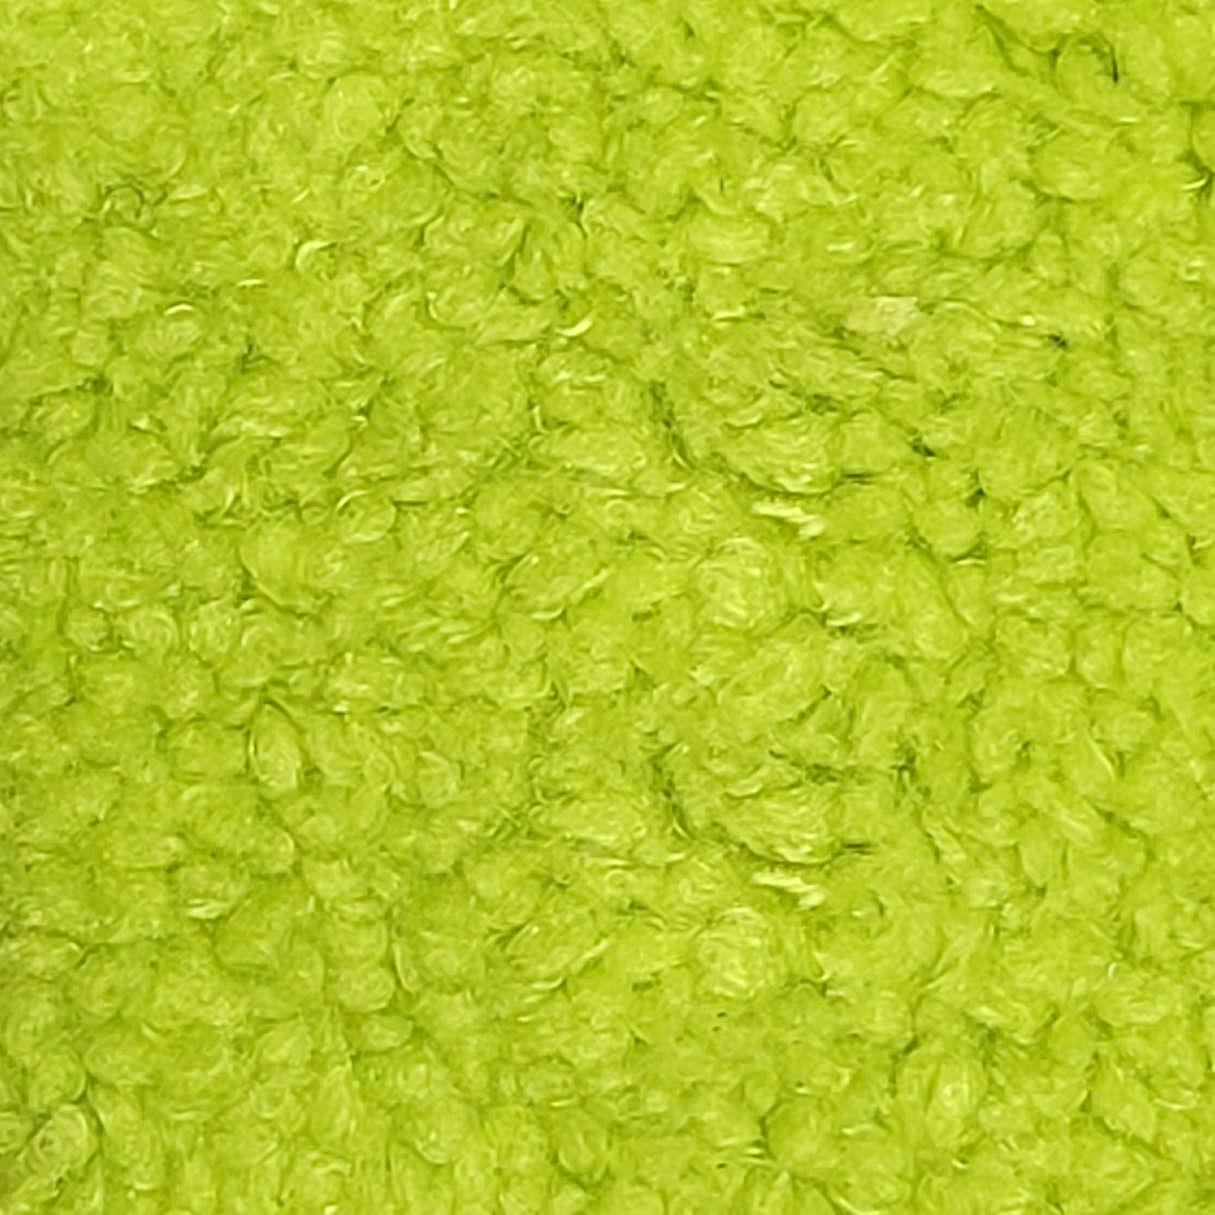 Poly Fur Knit Fabric | FAB1156 | 1.Green, 2.Navy, 3.Black, 4.Green, 5.Yellow, 6.Salmon by Fabricis.com #